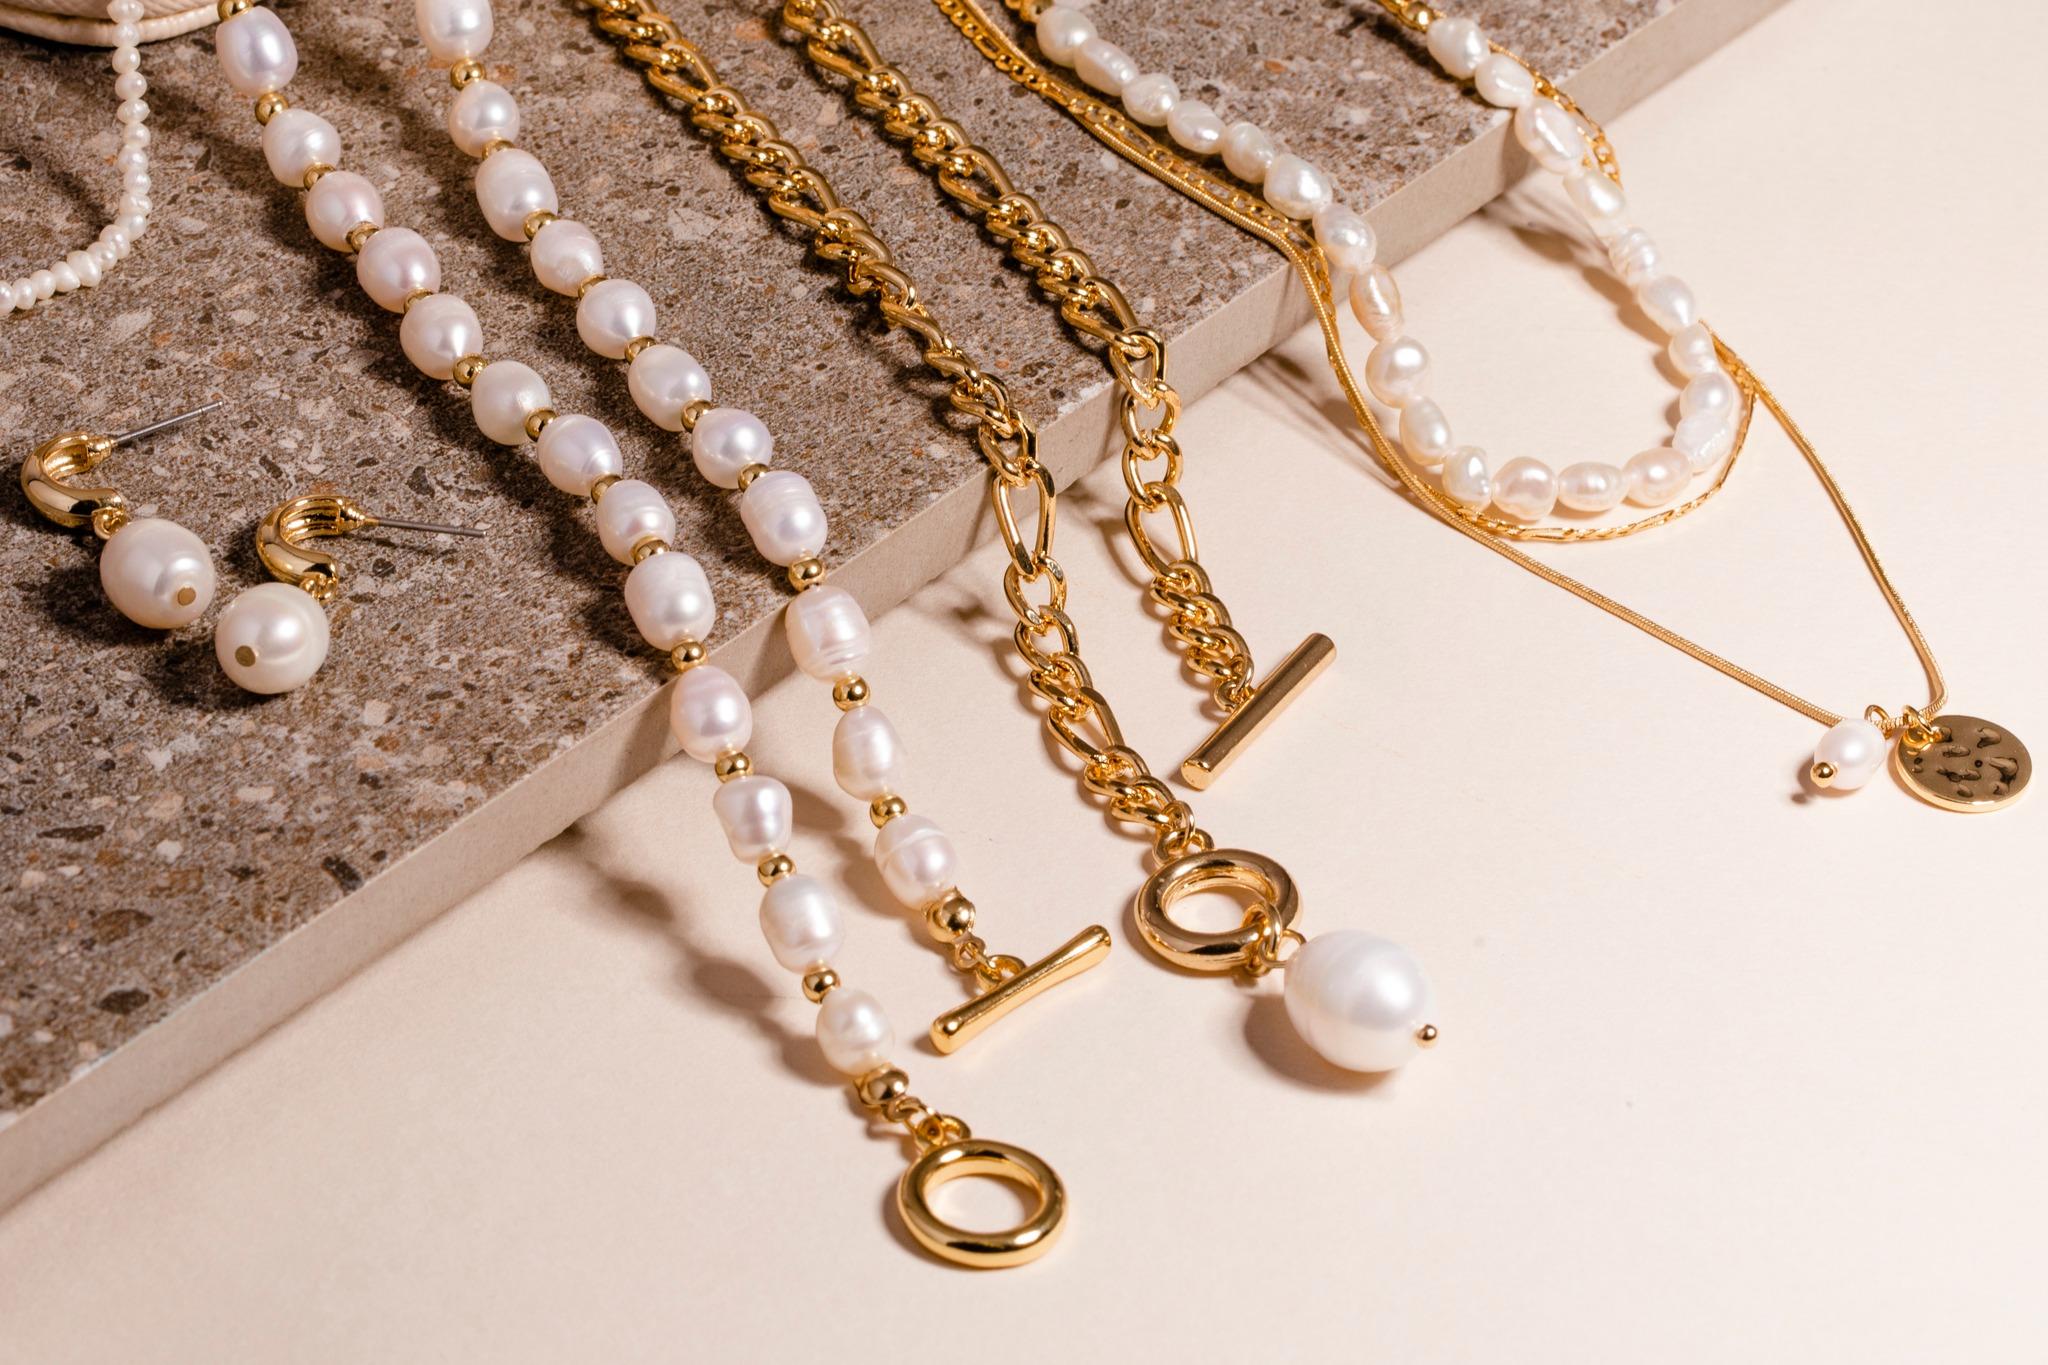 Lovisa Earrings 3 pairs, Women's Fashion, Jewelry & Organisers